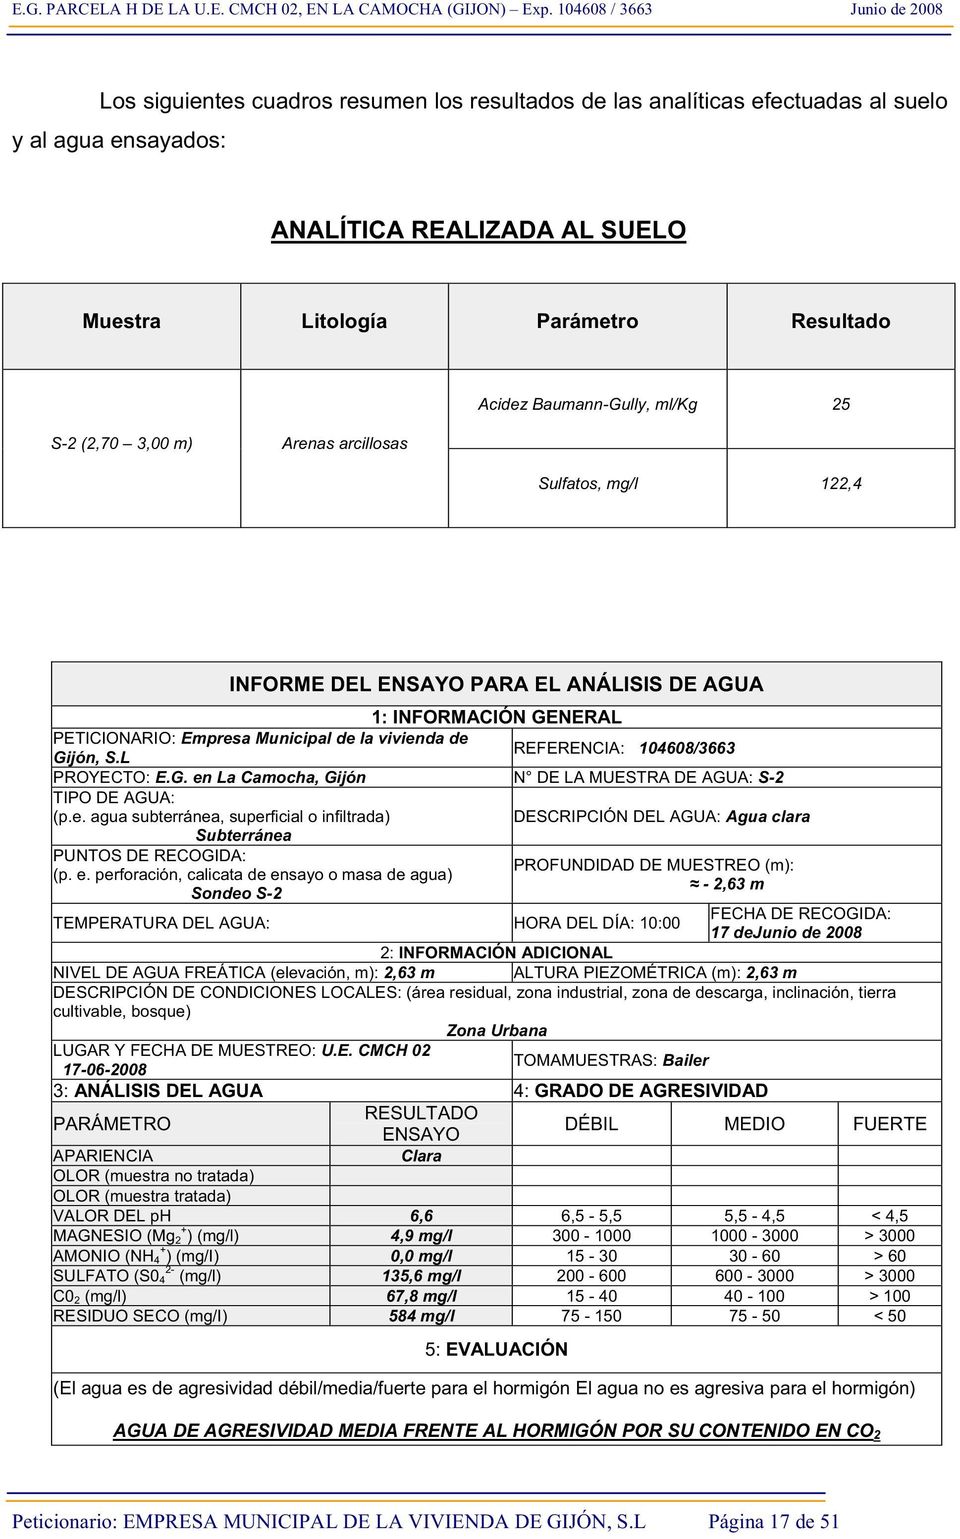 L REFERENCIA: 104608/3663 PROYECTO: E.G. en La Camocha, Gijón N DE LA MUESTRA DE AGUA: S-2 TIPO DE AGUA: (p.e. agua subterránea, superficial o infiltrada) DESCRIPCIÓN DEL AGUA: Agua clara Subterránea PUNTOS DE RECOGIDA: PROFUNDIDAD DE MUESTREO (m): (p.